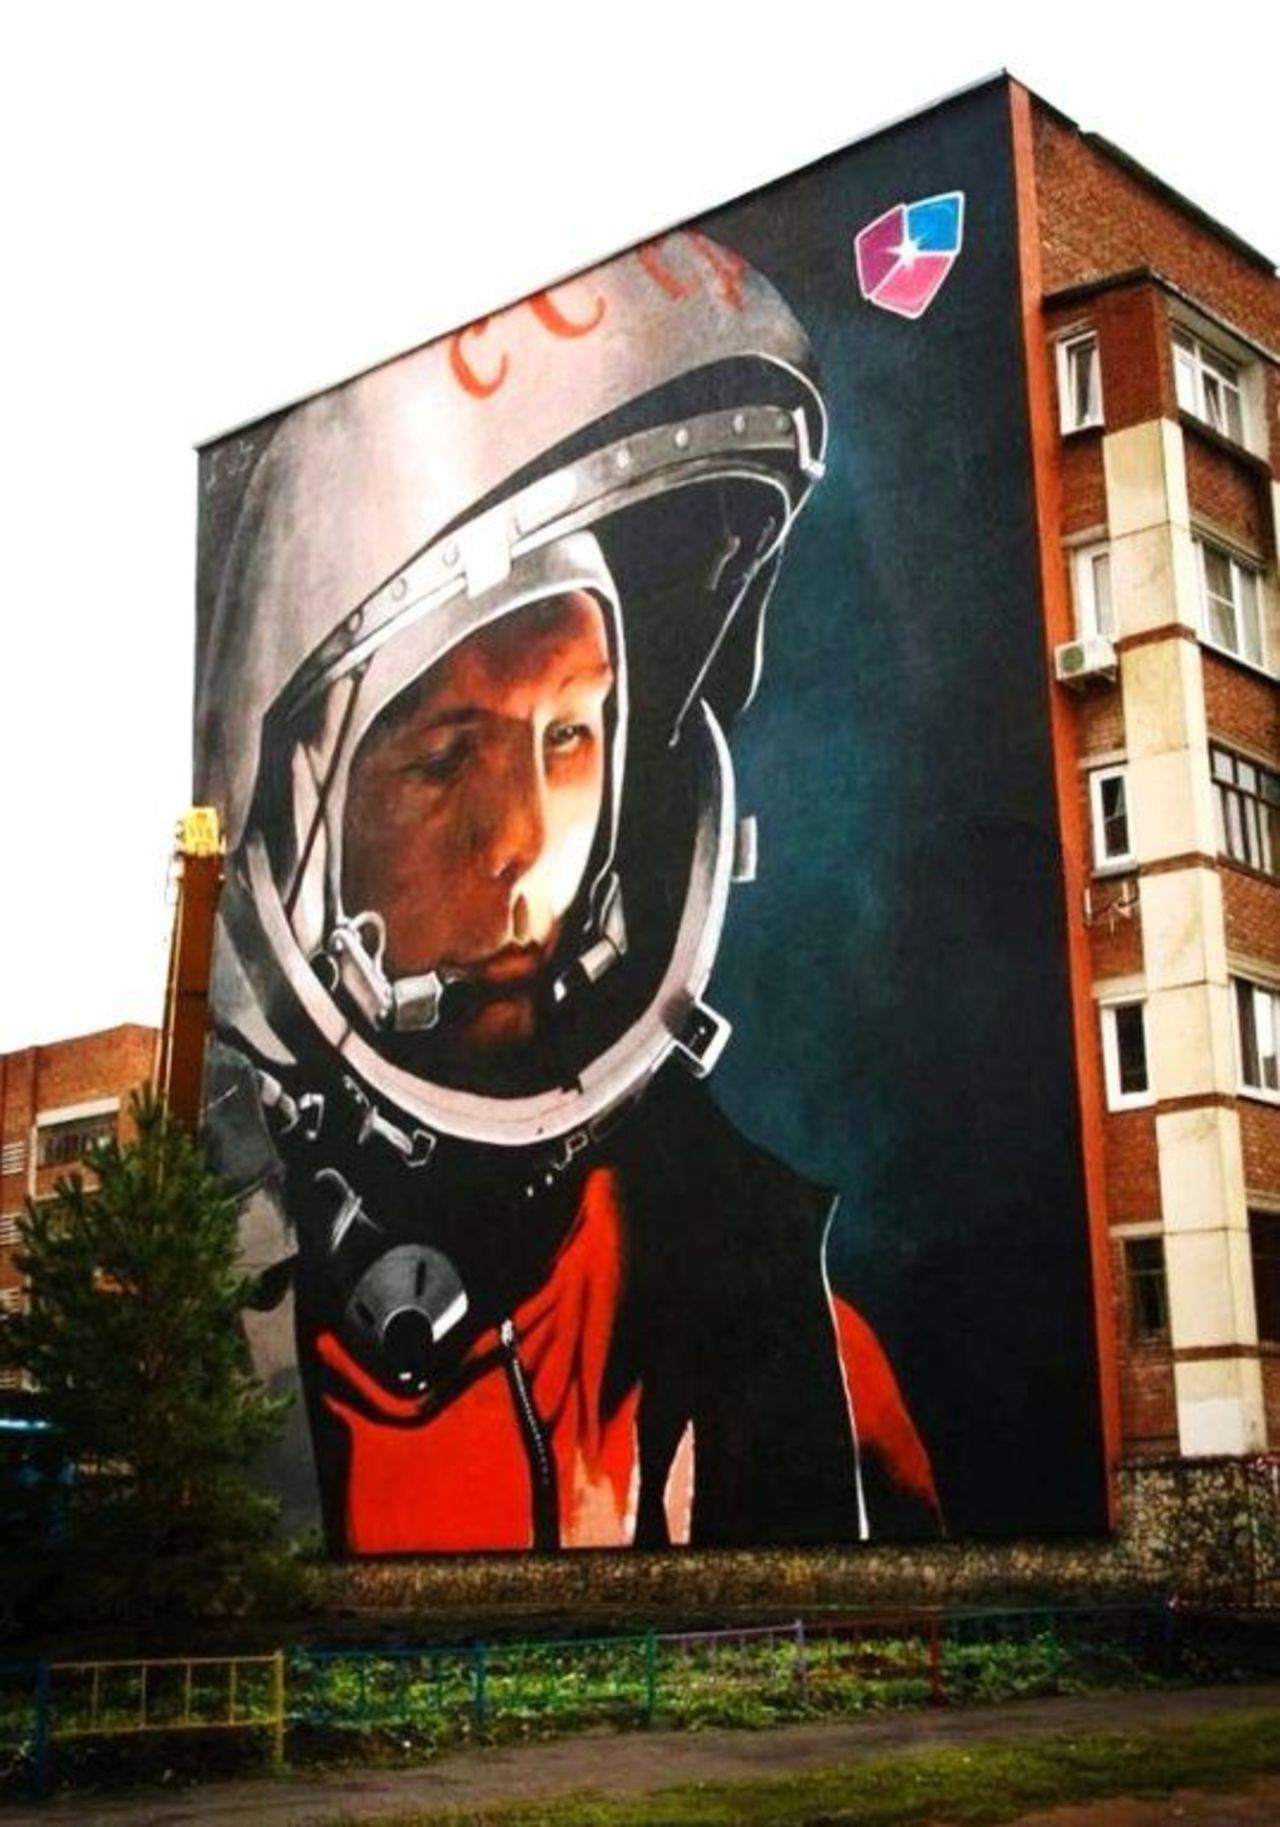 Russian street art: portrait of Yuri Gagarin, the first human in space #streetart #Russia #Russianhistory https://t.co/C3Jtlw1YIi